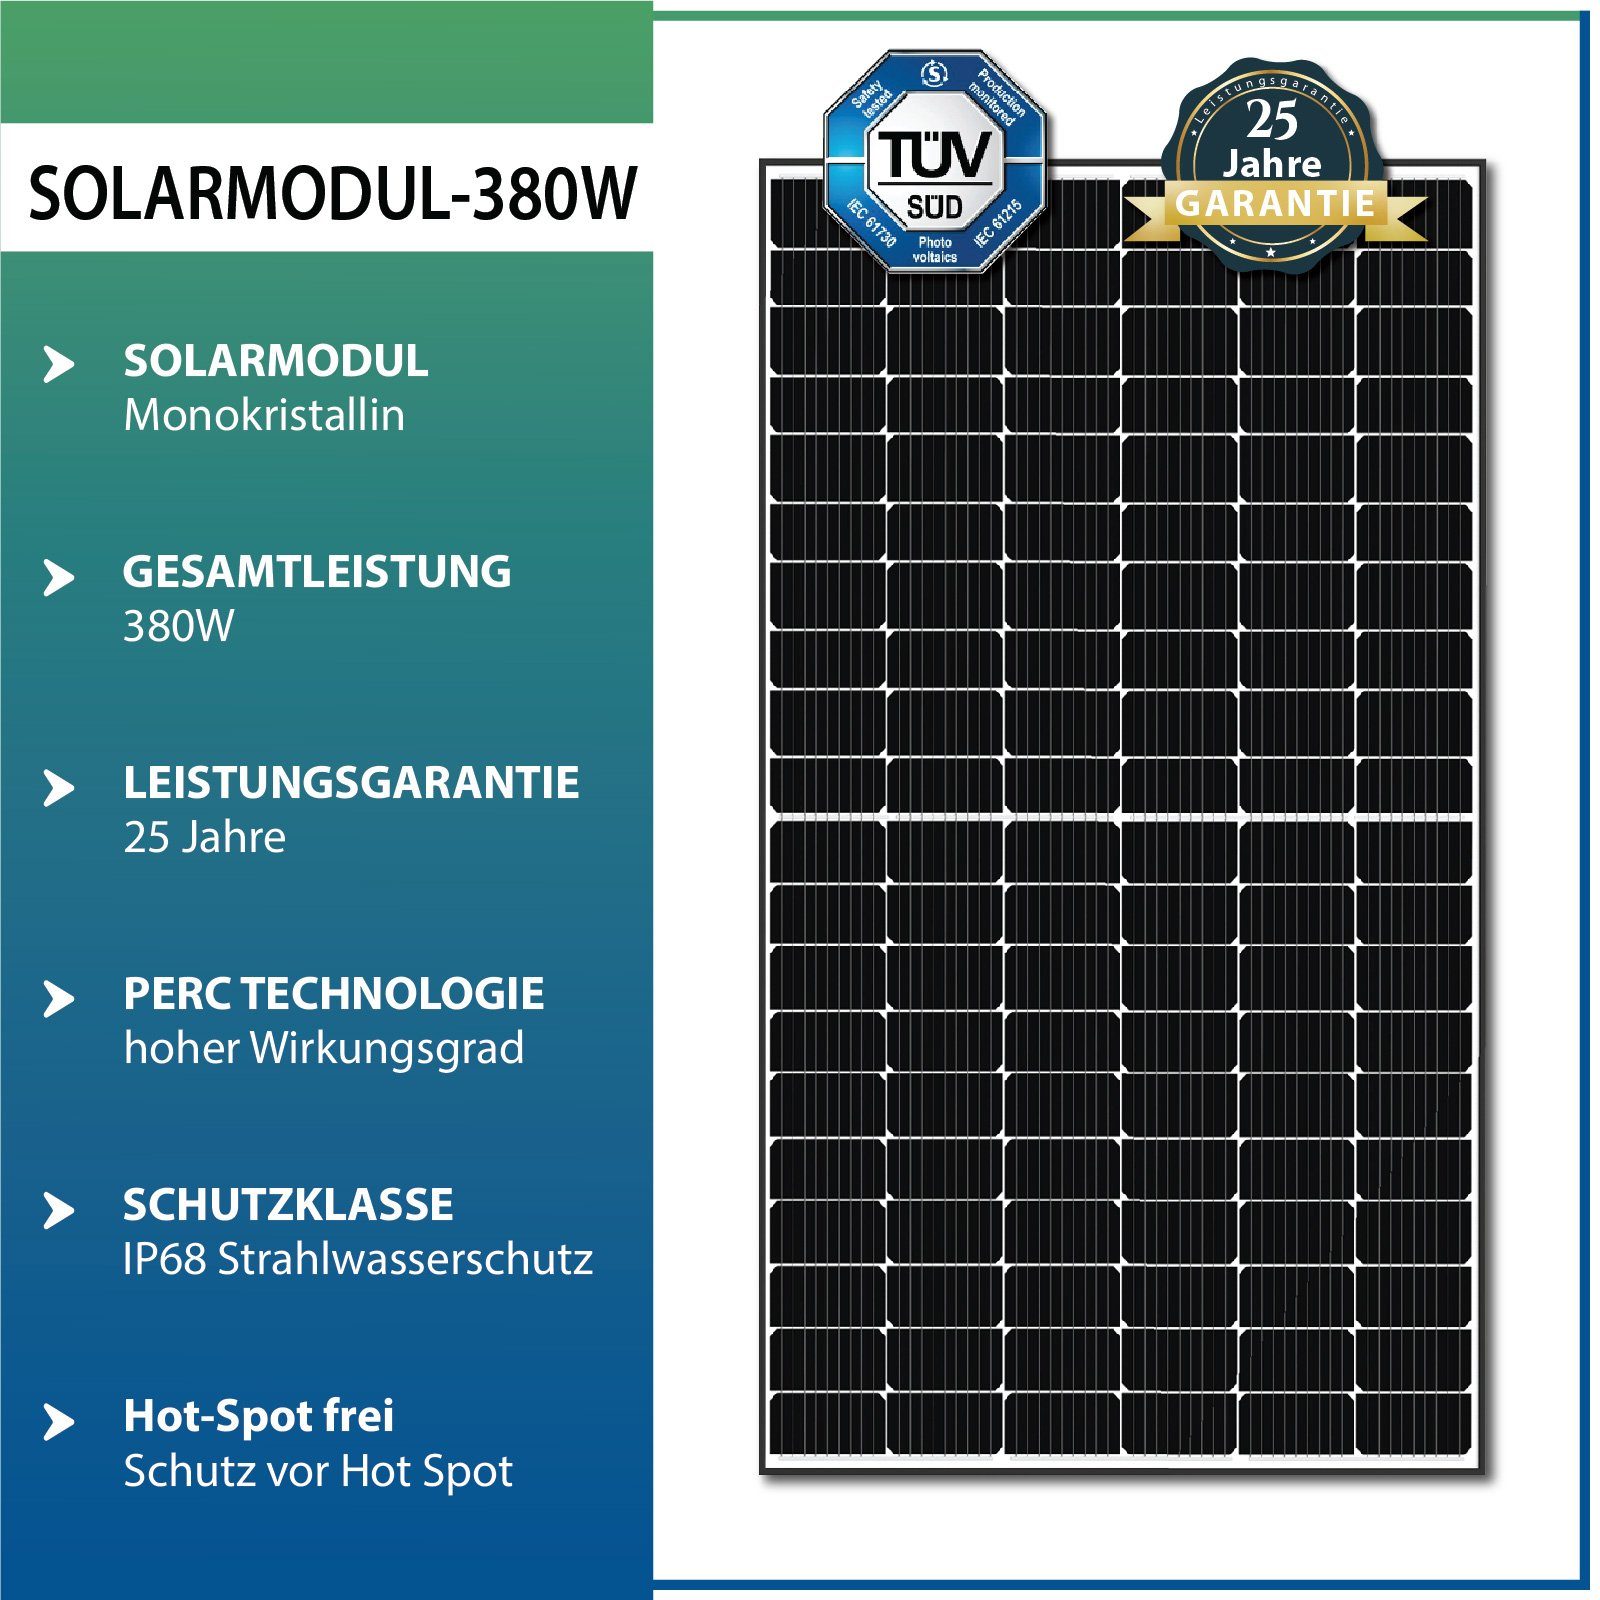 EPP.Solar Solarmodul Balkonkraftwerk Solarmodul 380W IP68, Solaranlage, Photovoltaik Schwarz Wasserdichtigkeitsklasse (Solarpanel)